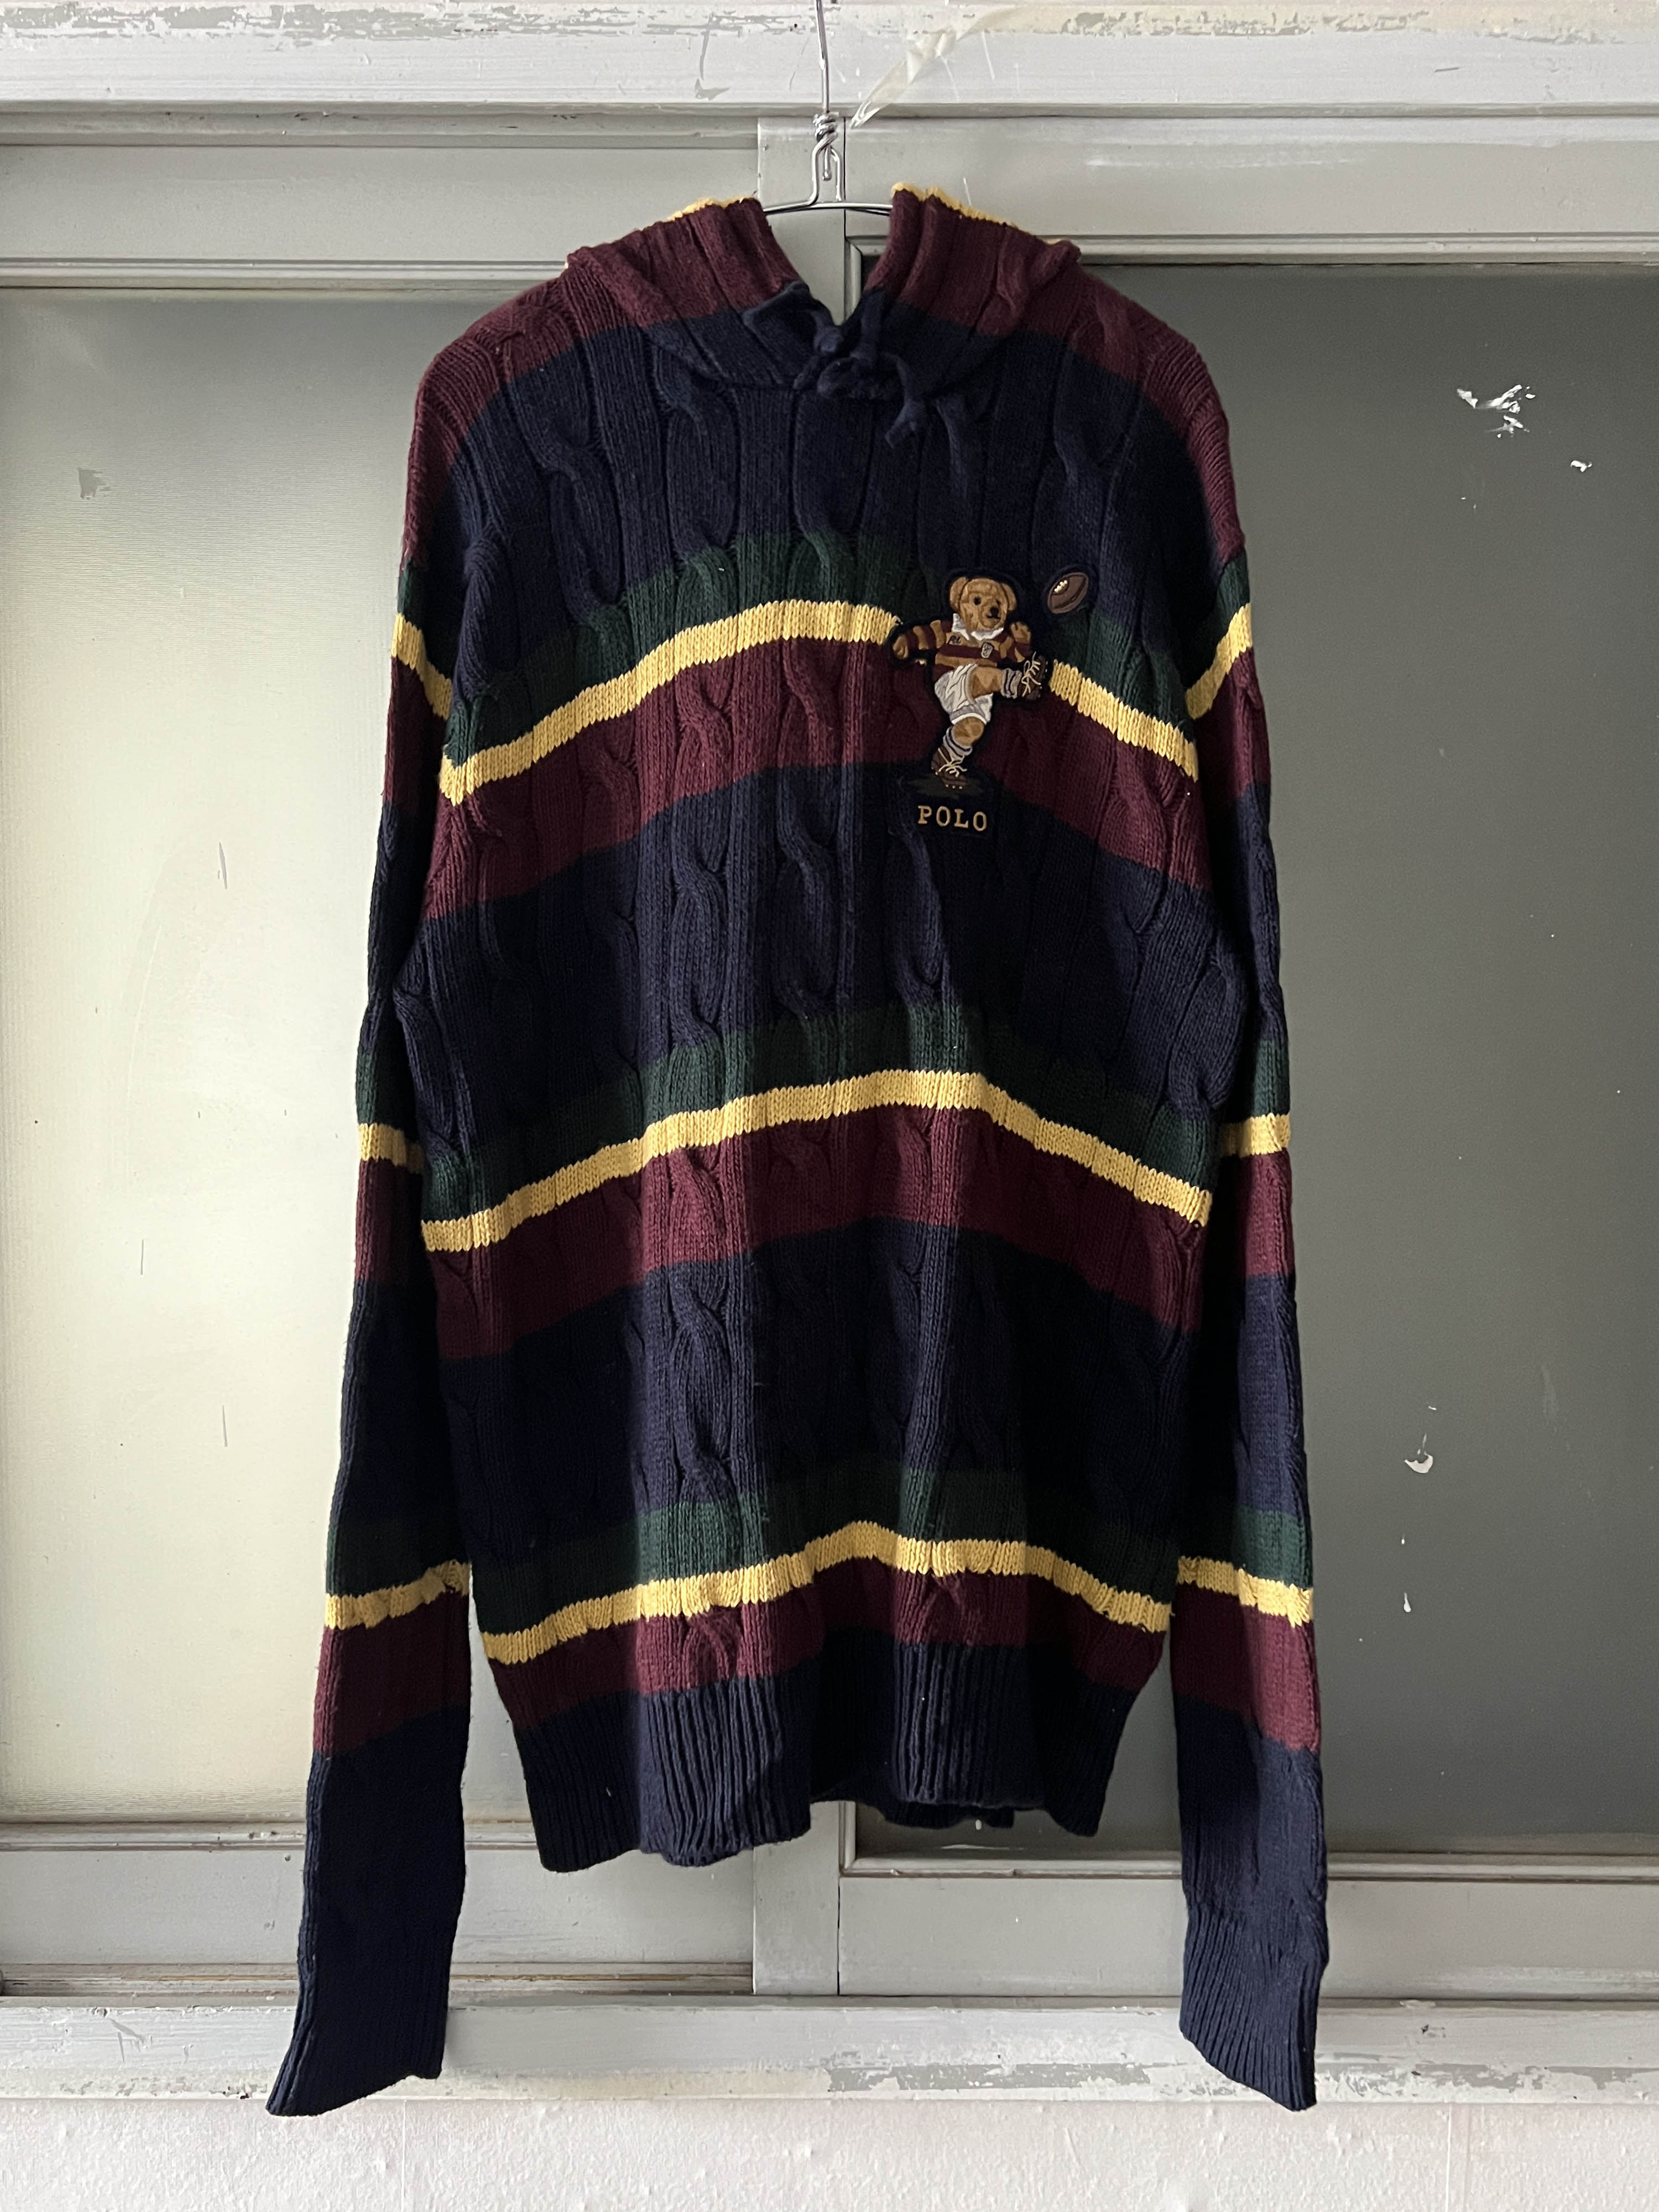 Polo by Ralph Lauren bear knit hoodie